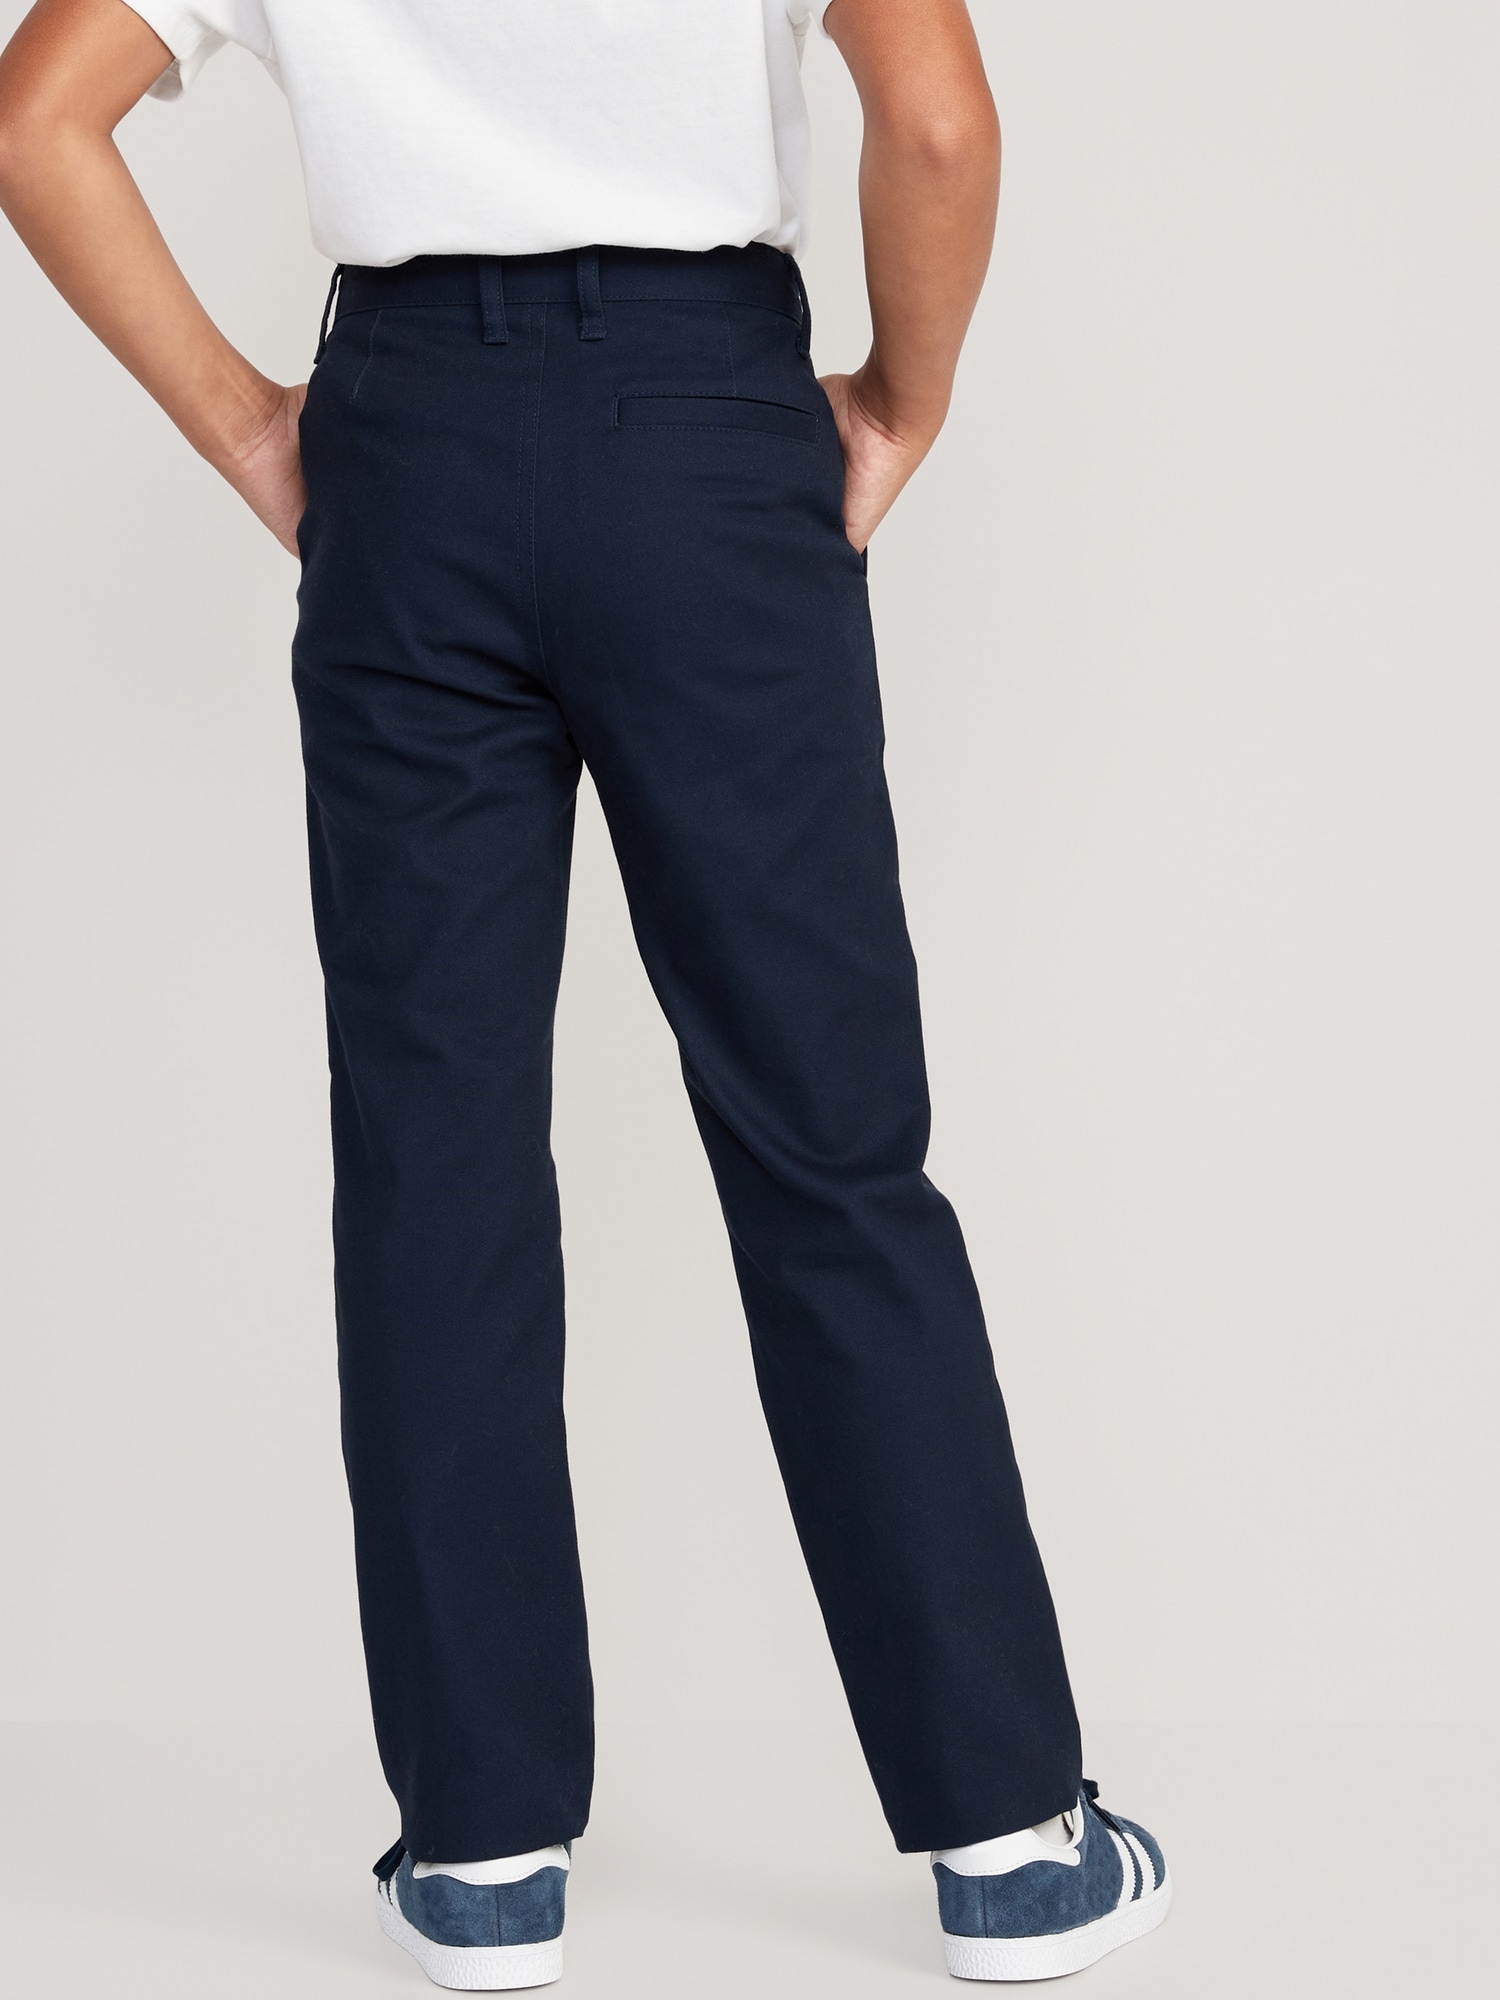 Amazon.com: CLASSROOM Little Boys' Uniform Pull-On Pant, Dark Navy, 4:  School Uniform Pants: Clothing, Shoes & Jewelry